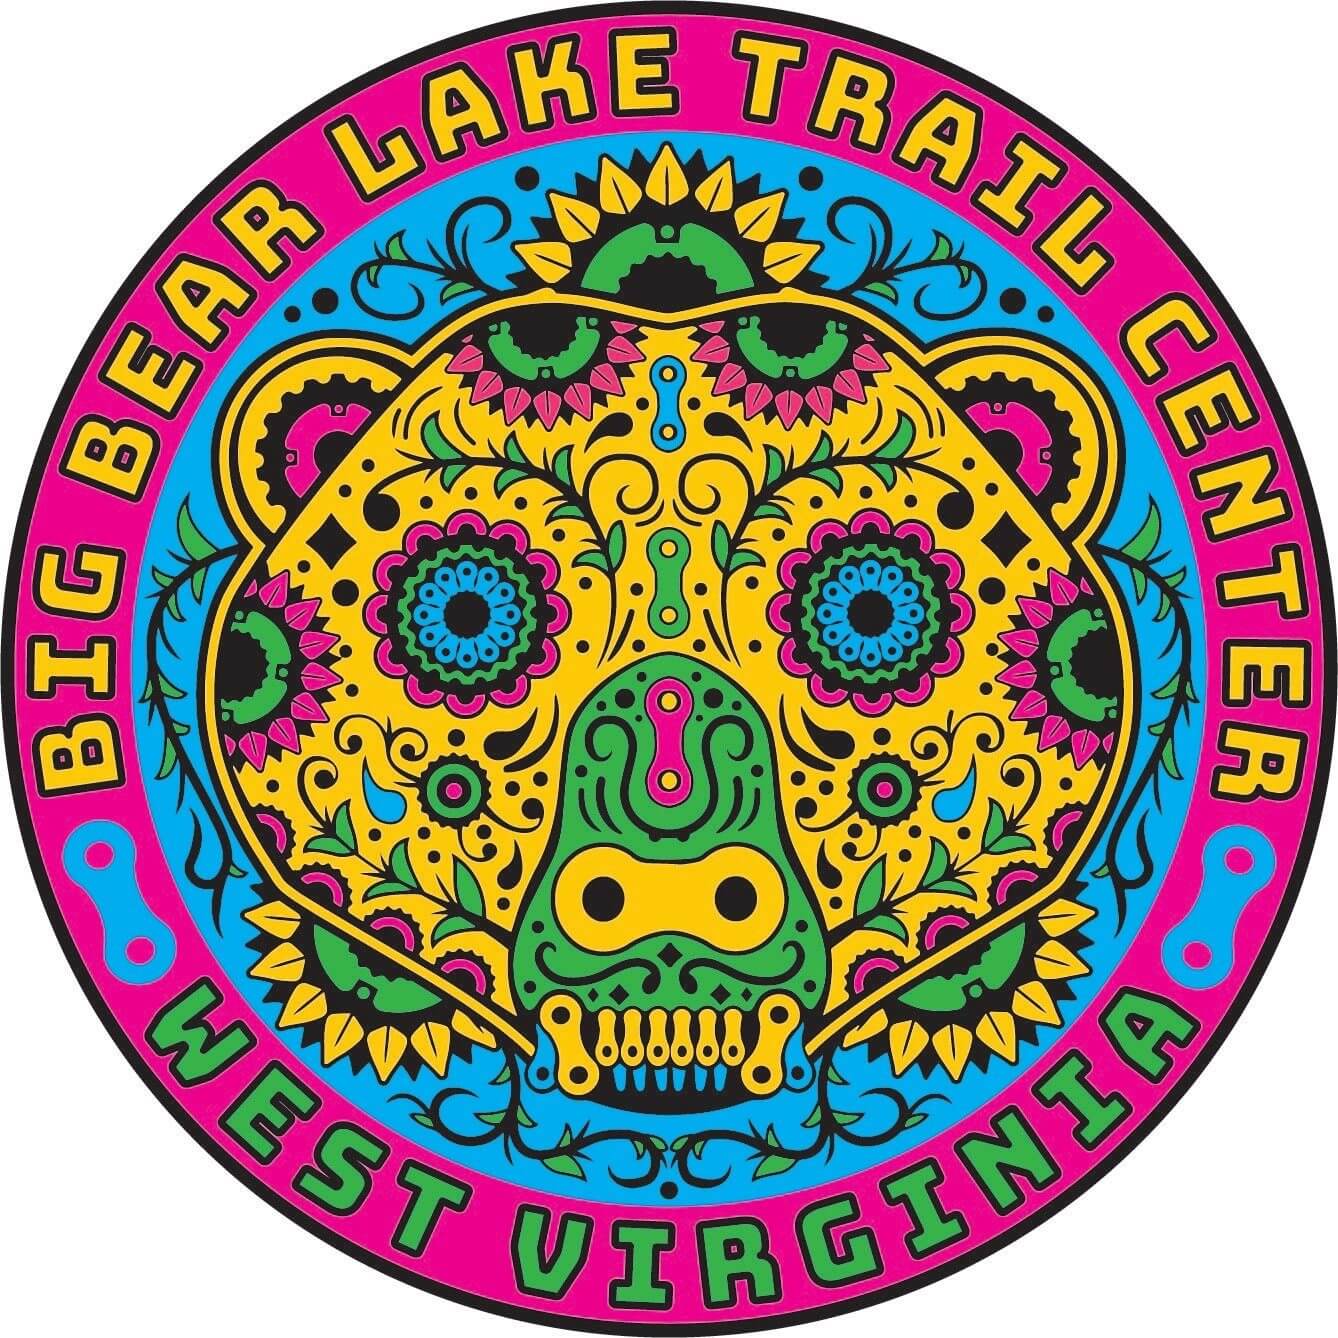 Big Bear Lake Trail Center Logo